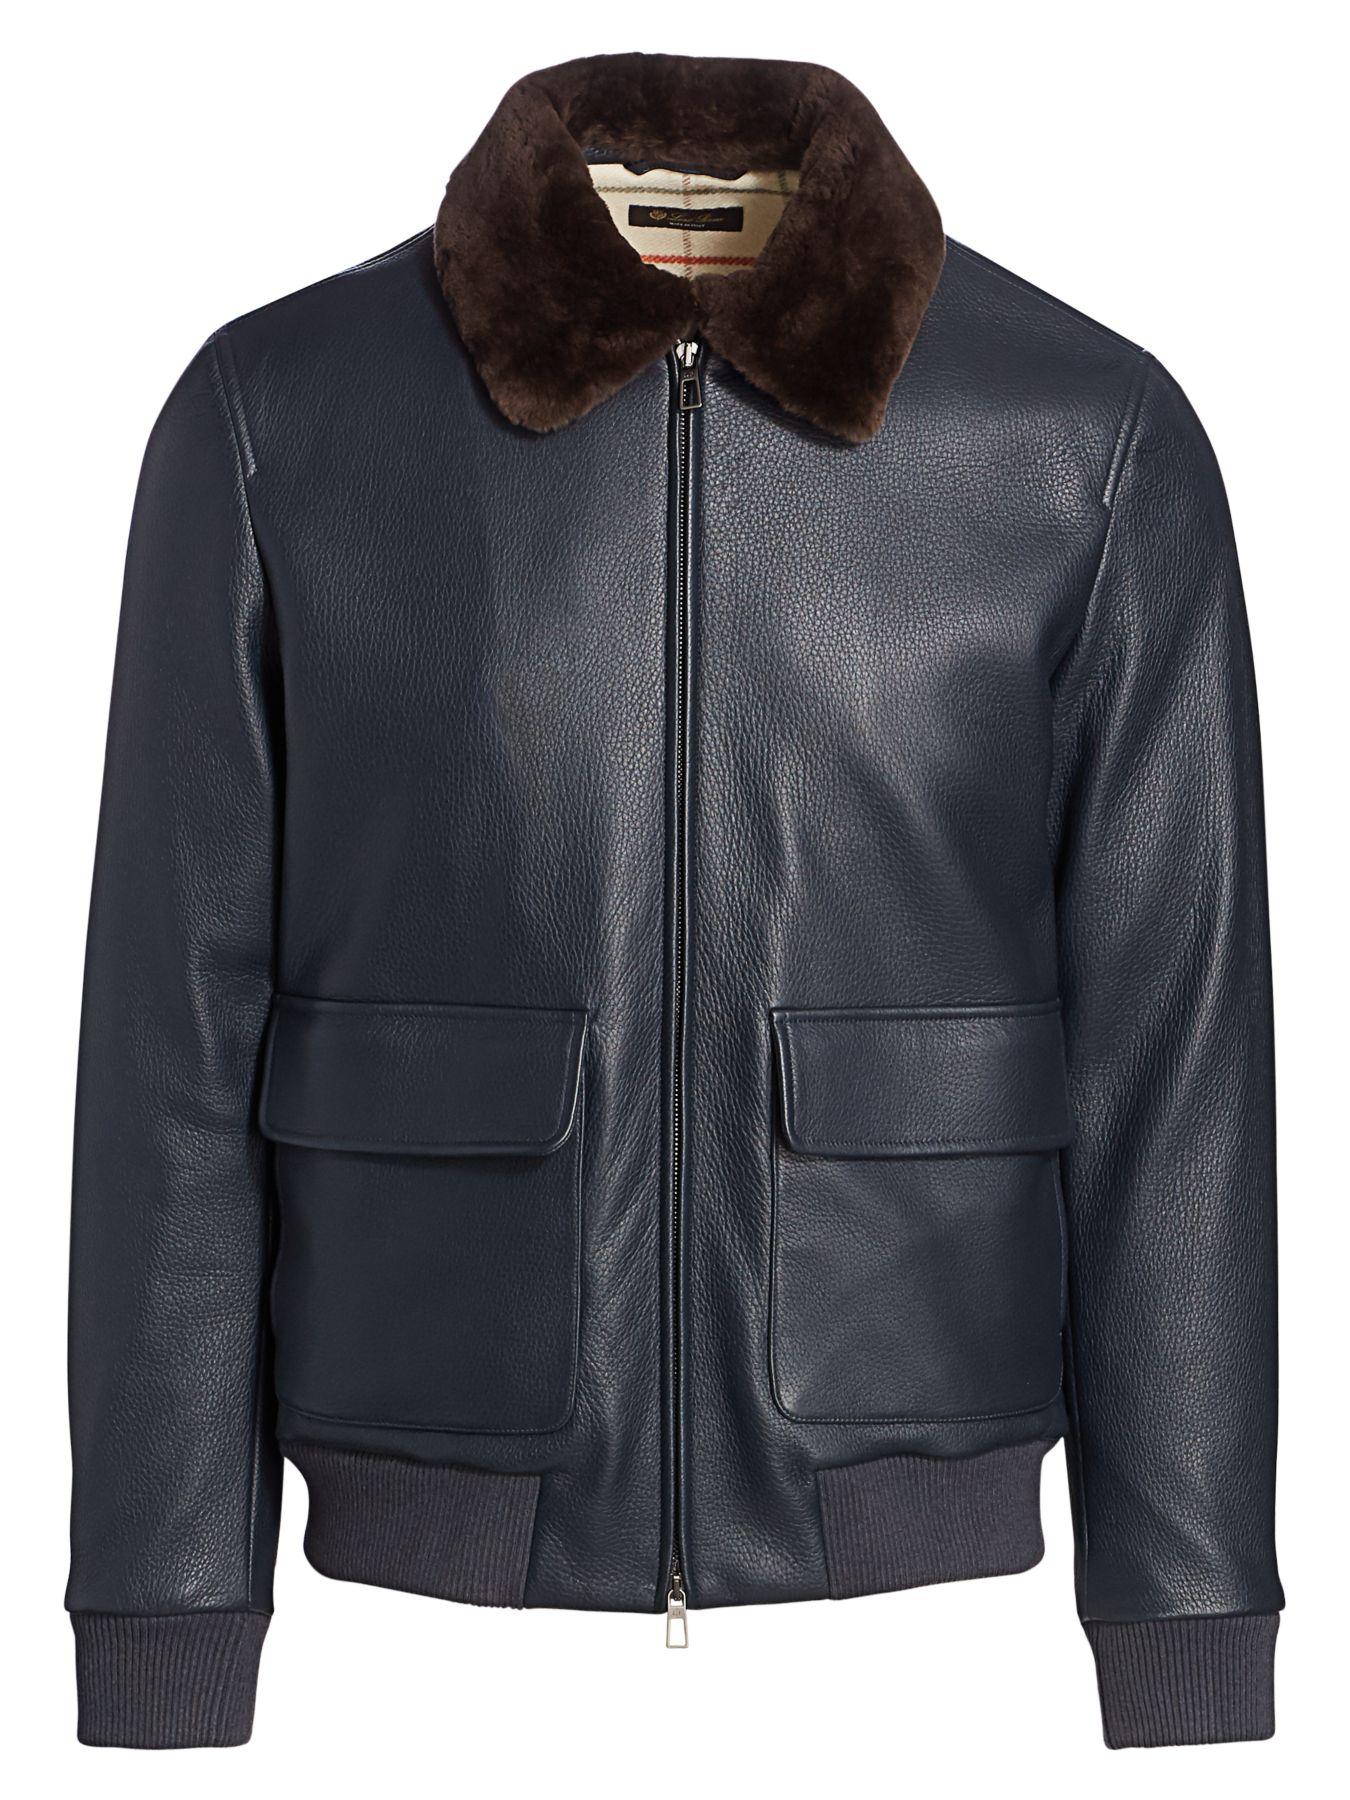 Loro Piana Patton Leather Bomber Jacket in Brown for Men Mens Clothing Jackets Leather jackets 